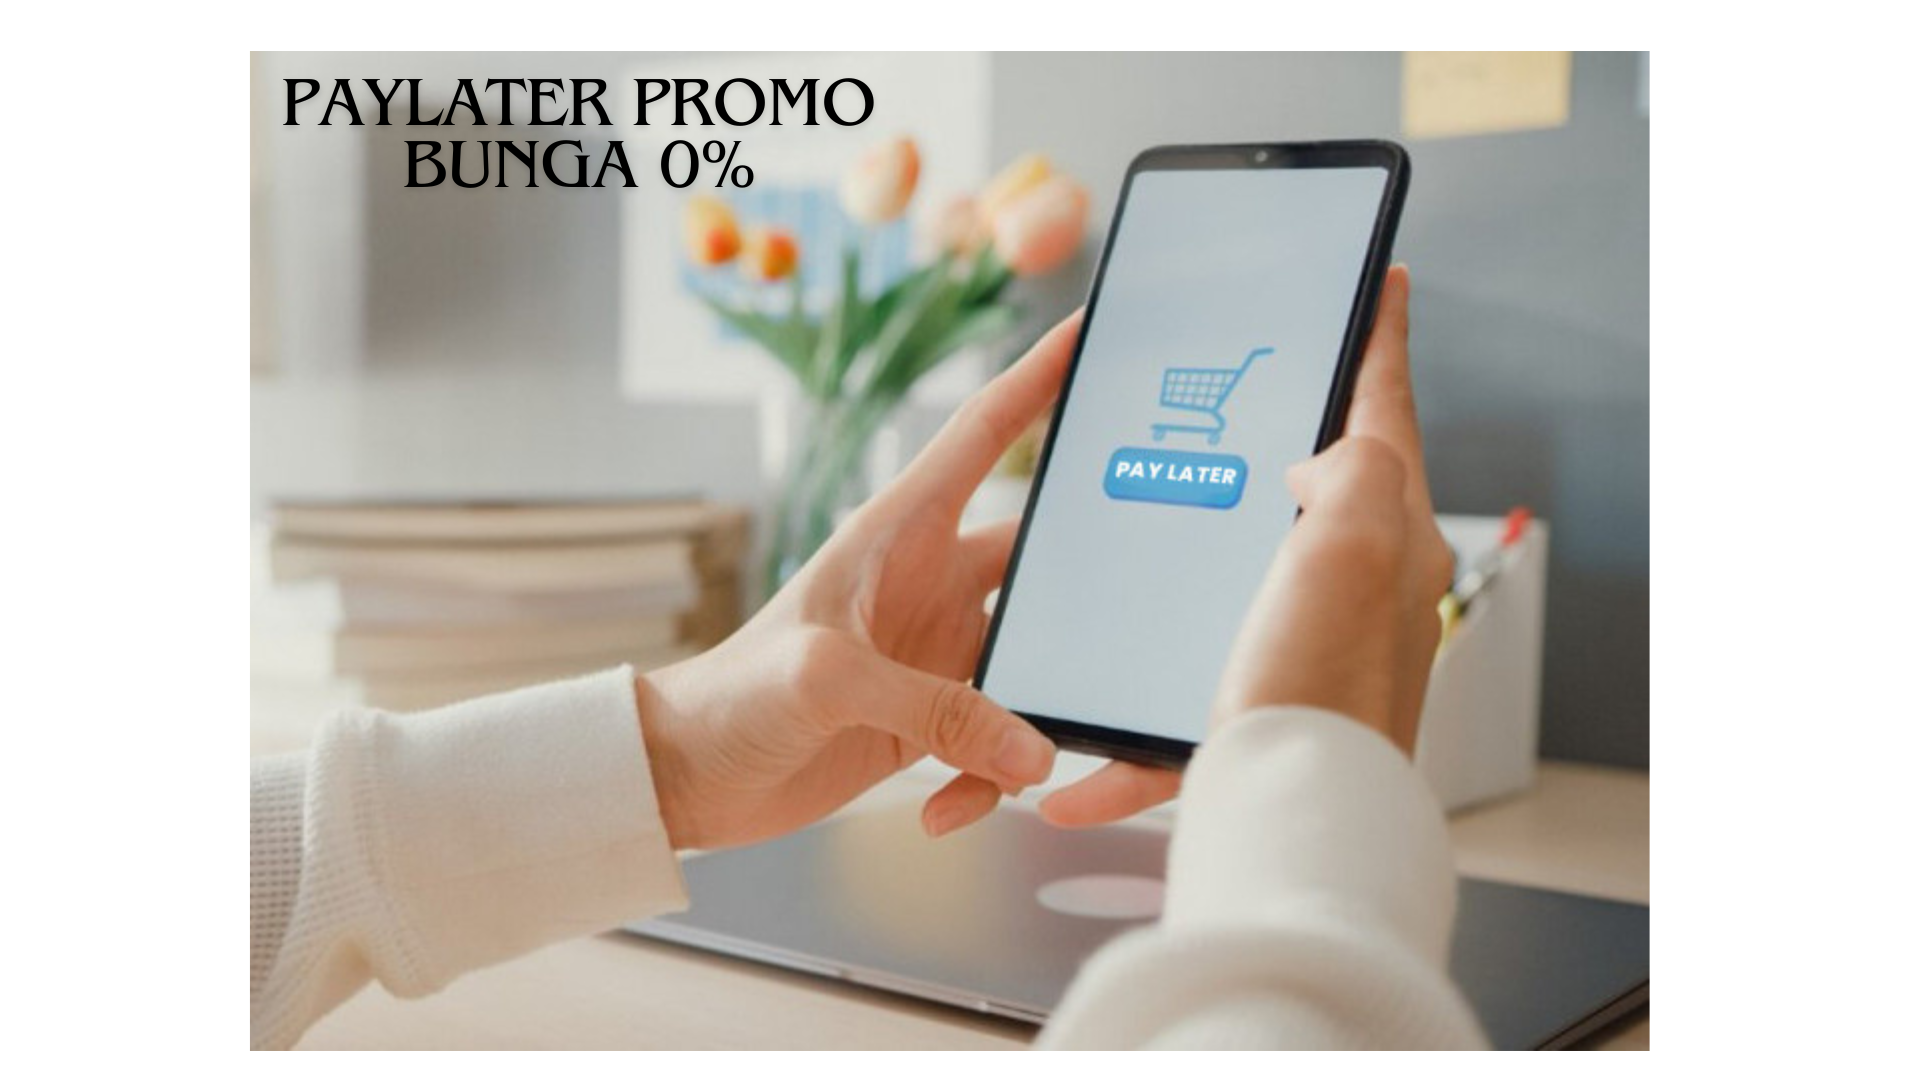 Buruan Daftar, BCA Paylater Tawarkan Promo Bunga 0% dan Fasilitas Kemudahan